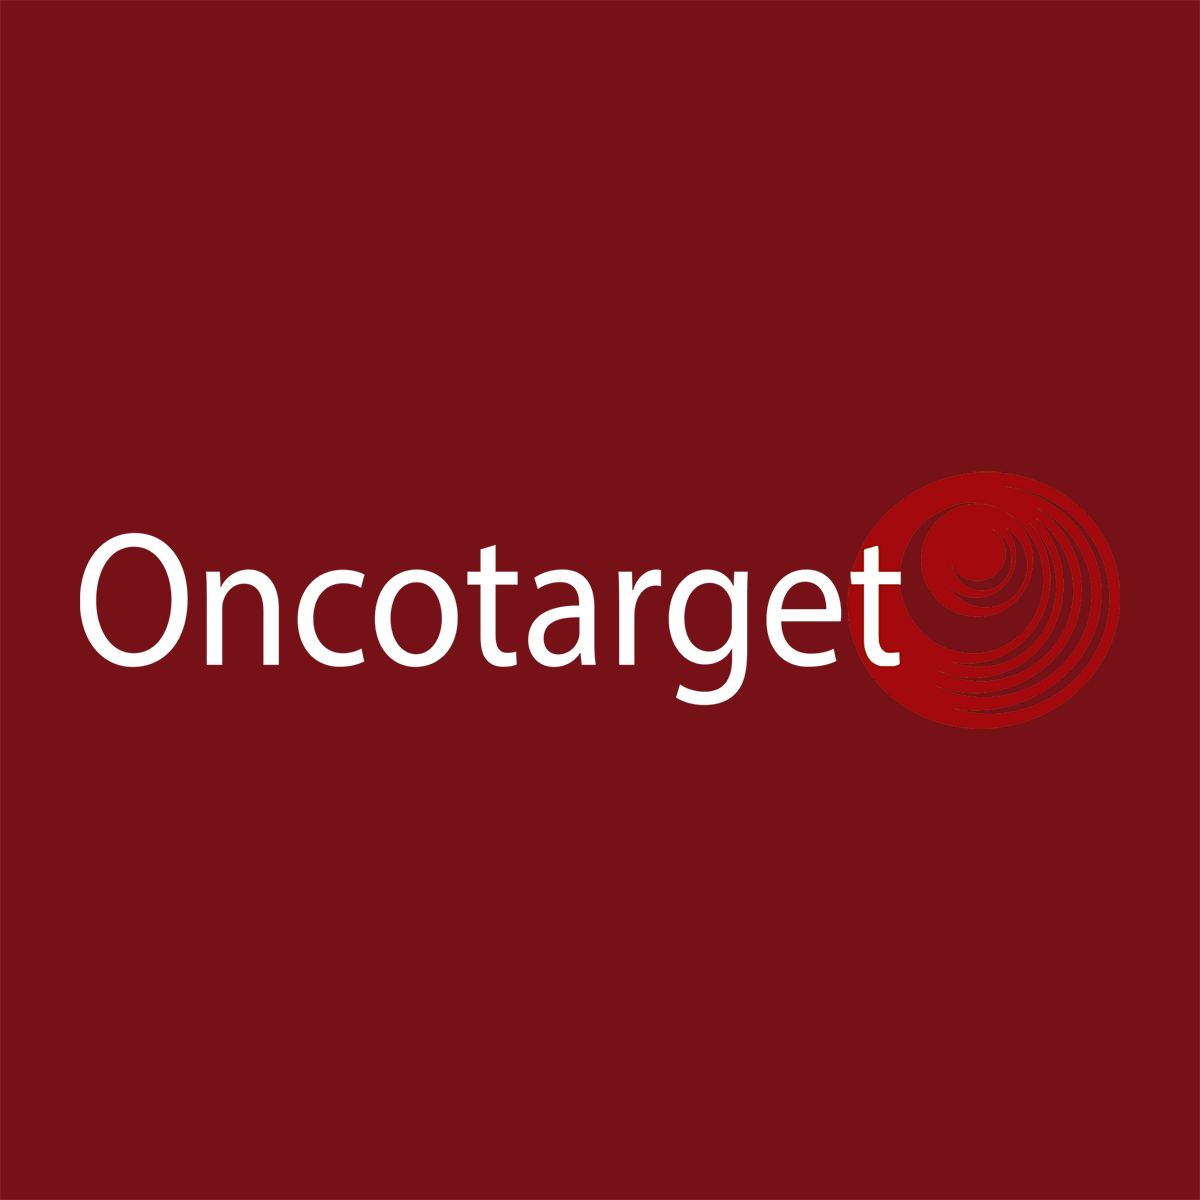 oncotarget-logo-square